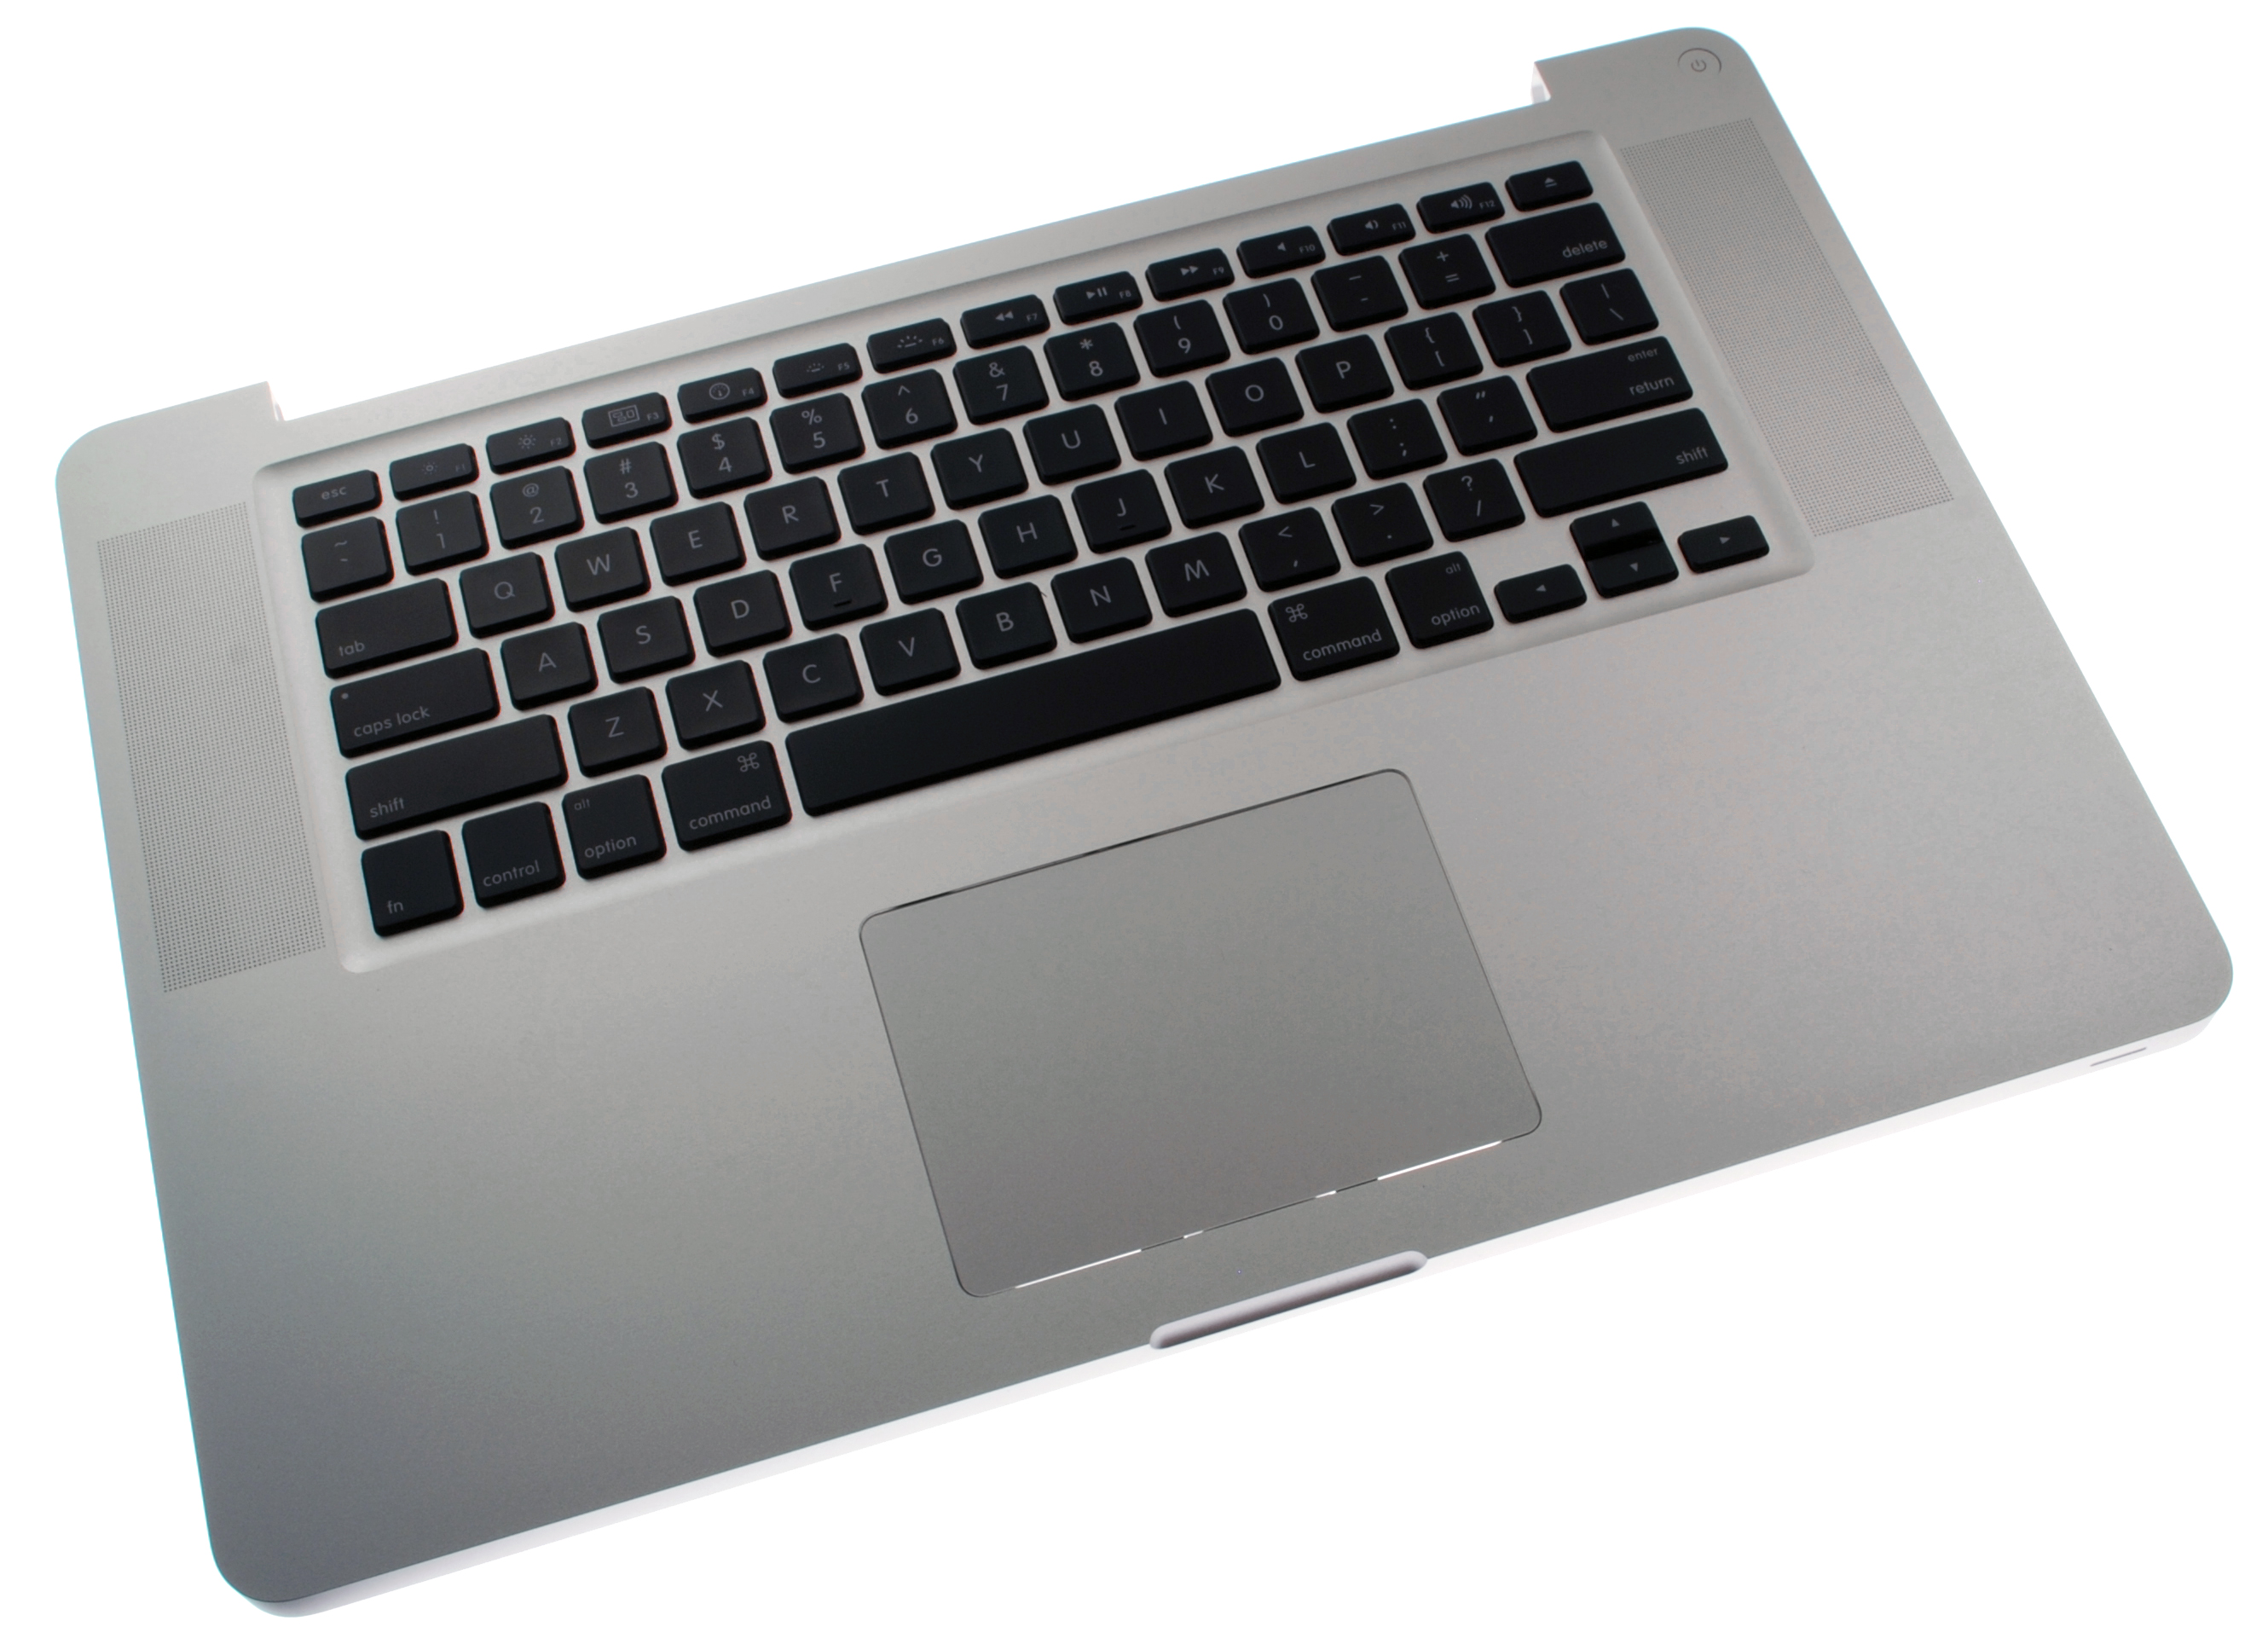 Macbook Pro 15" uppercase